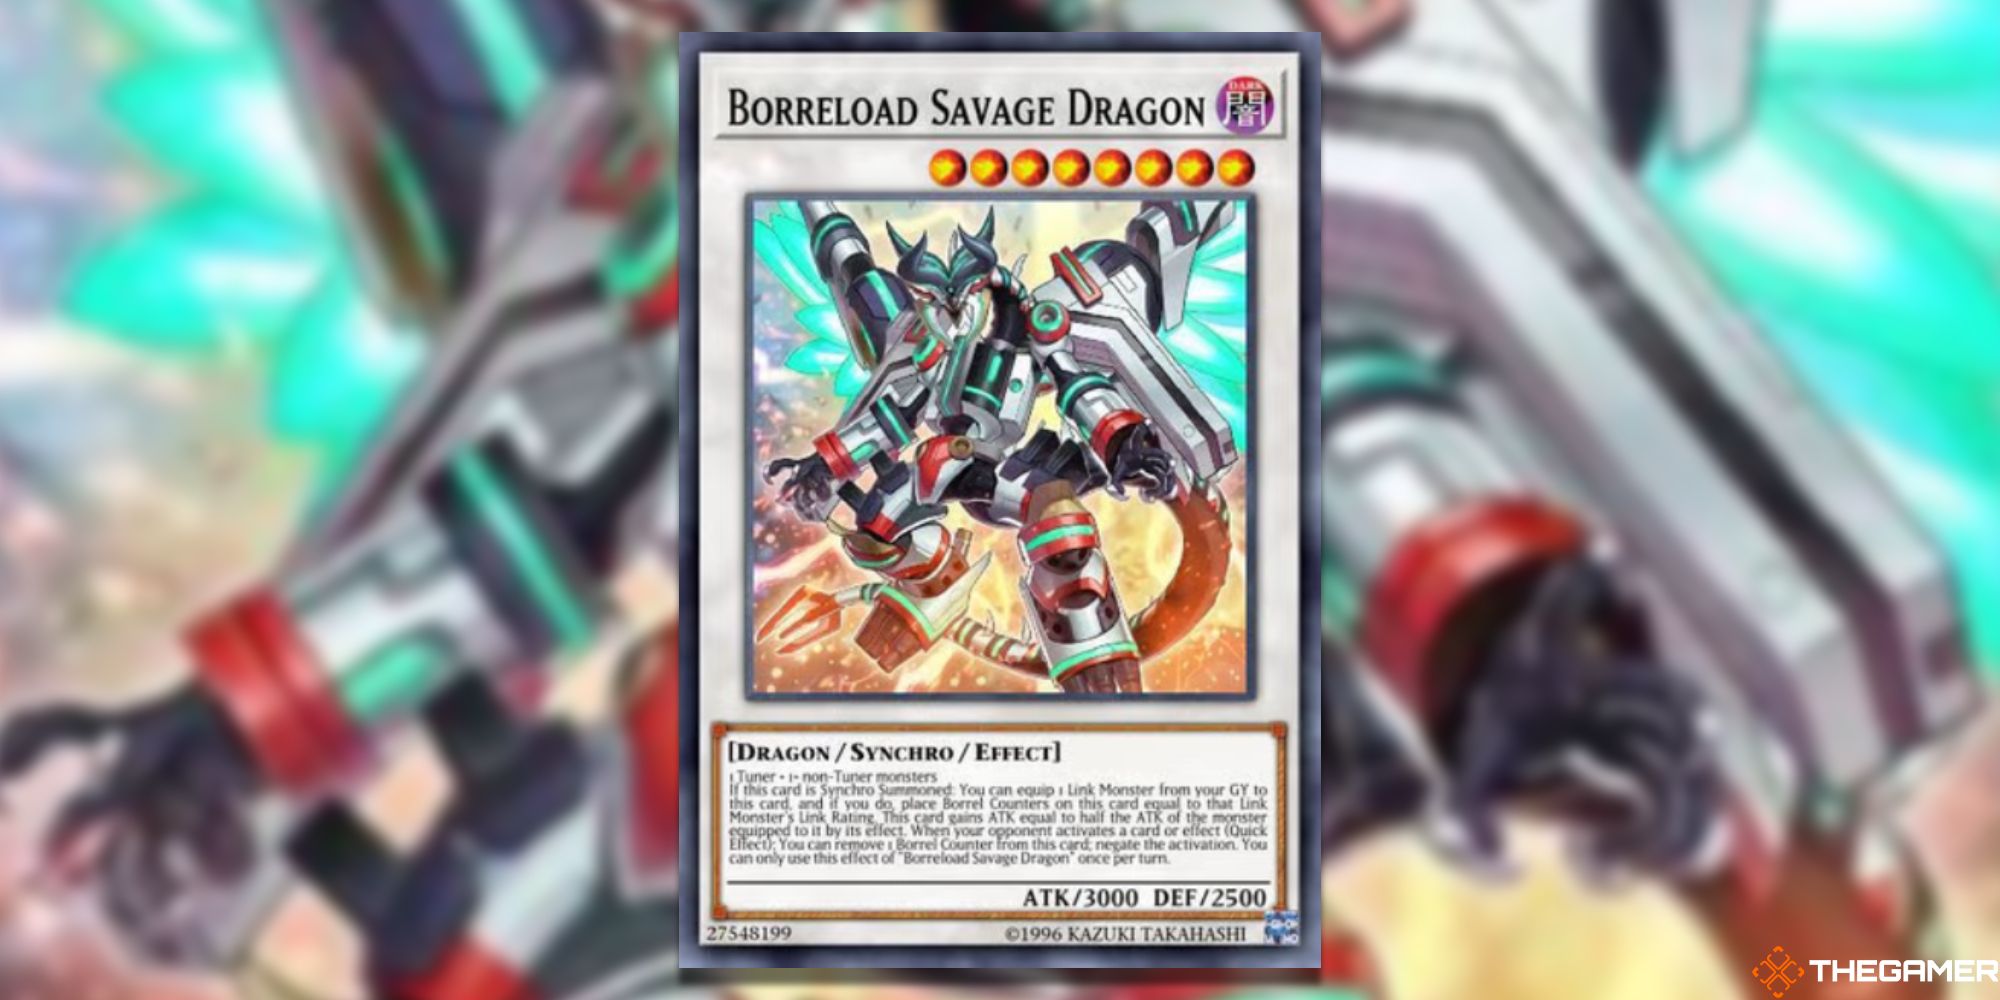 Yu-Gi-Oh! Borreload Savage Dragon on blurred background